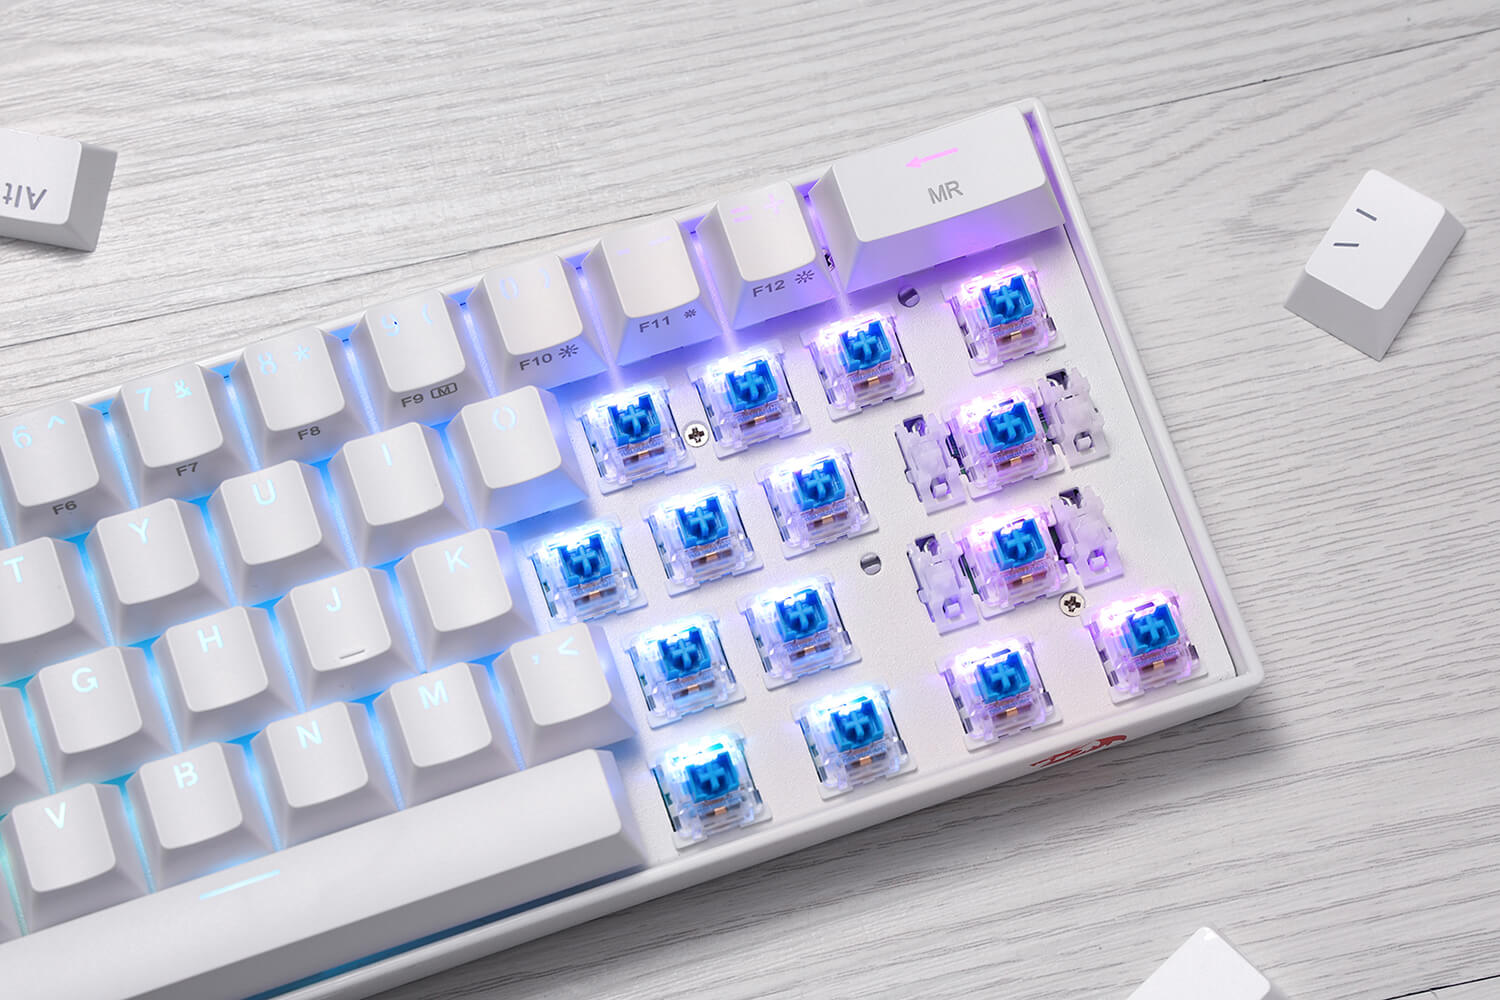 60% keyboard layout blue switches